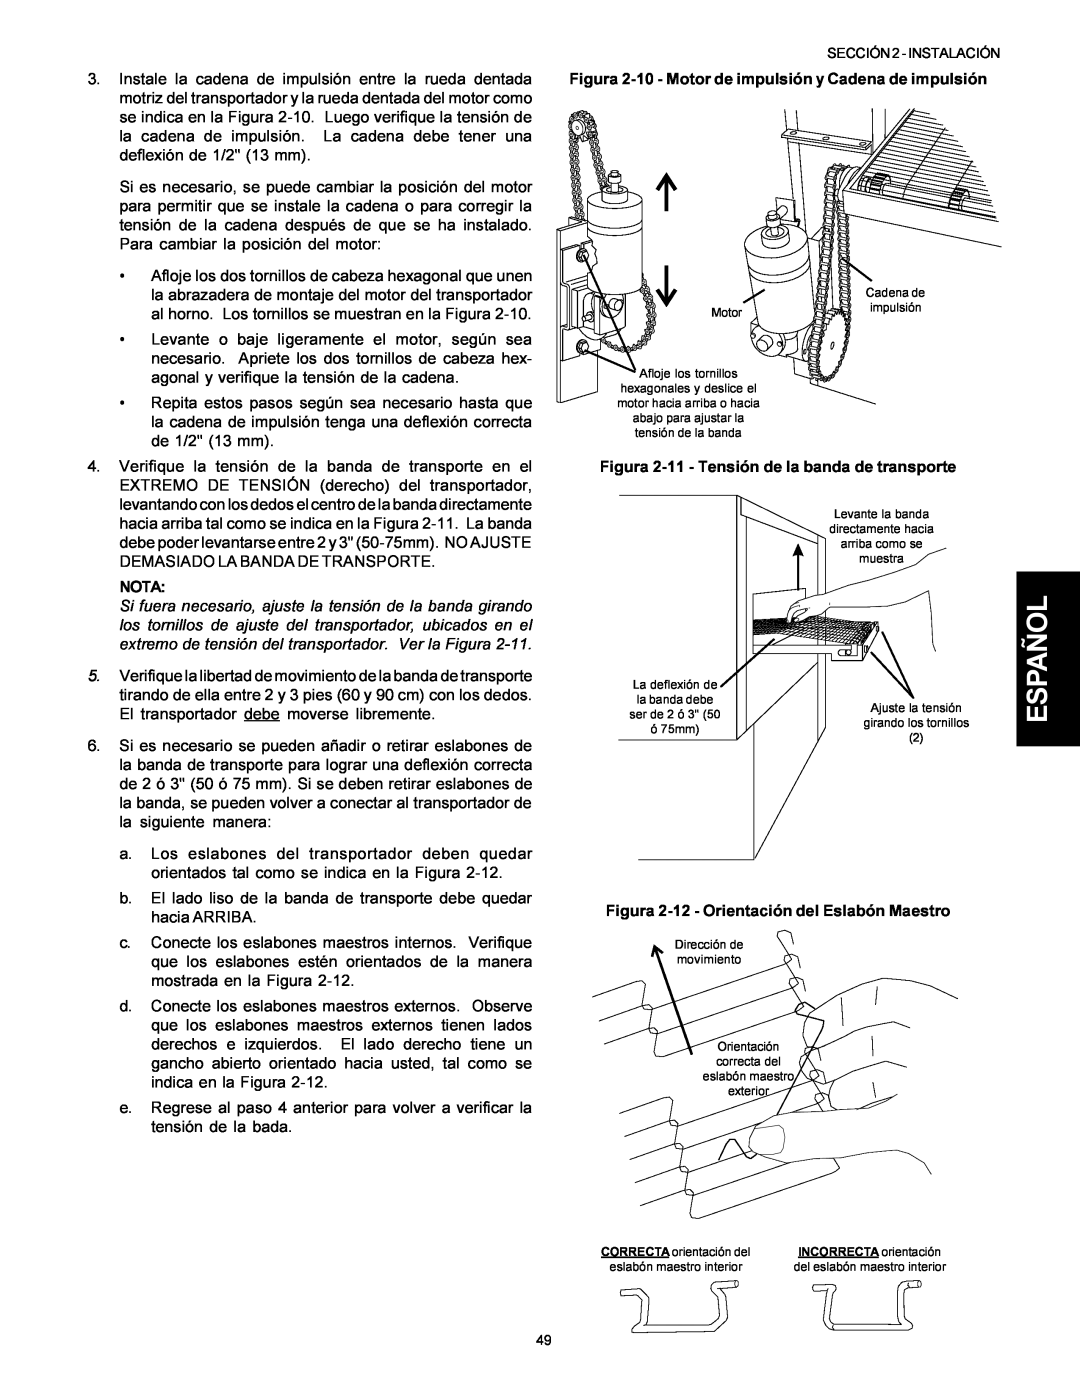 Middleby Marshall PS314SBI installation manual Español, Nota, Figura 2-11- Tensión de la banda de transporte 